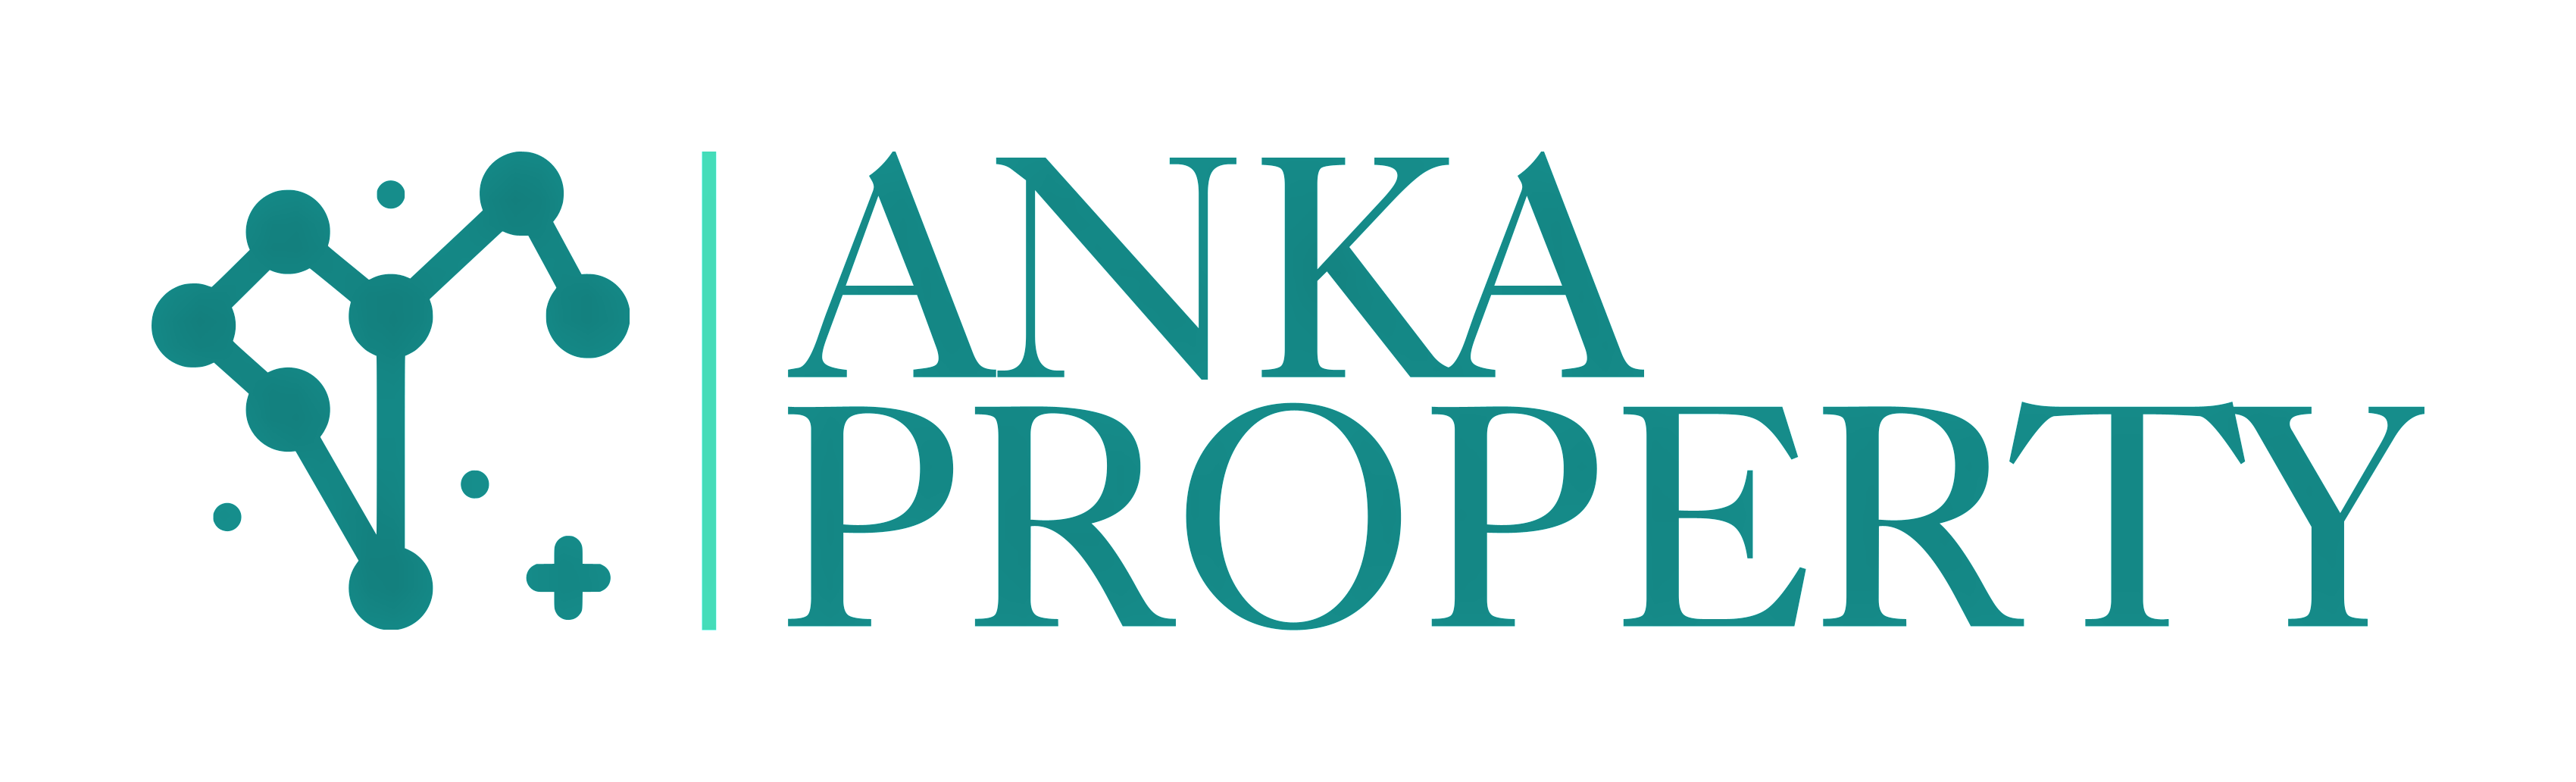 ANKA PROPERTY Image